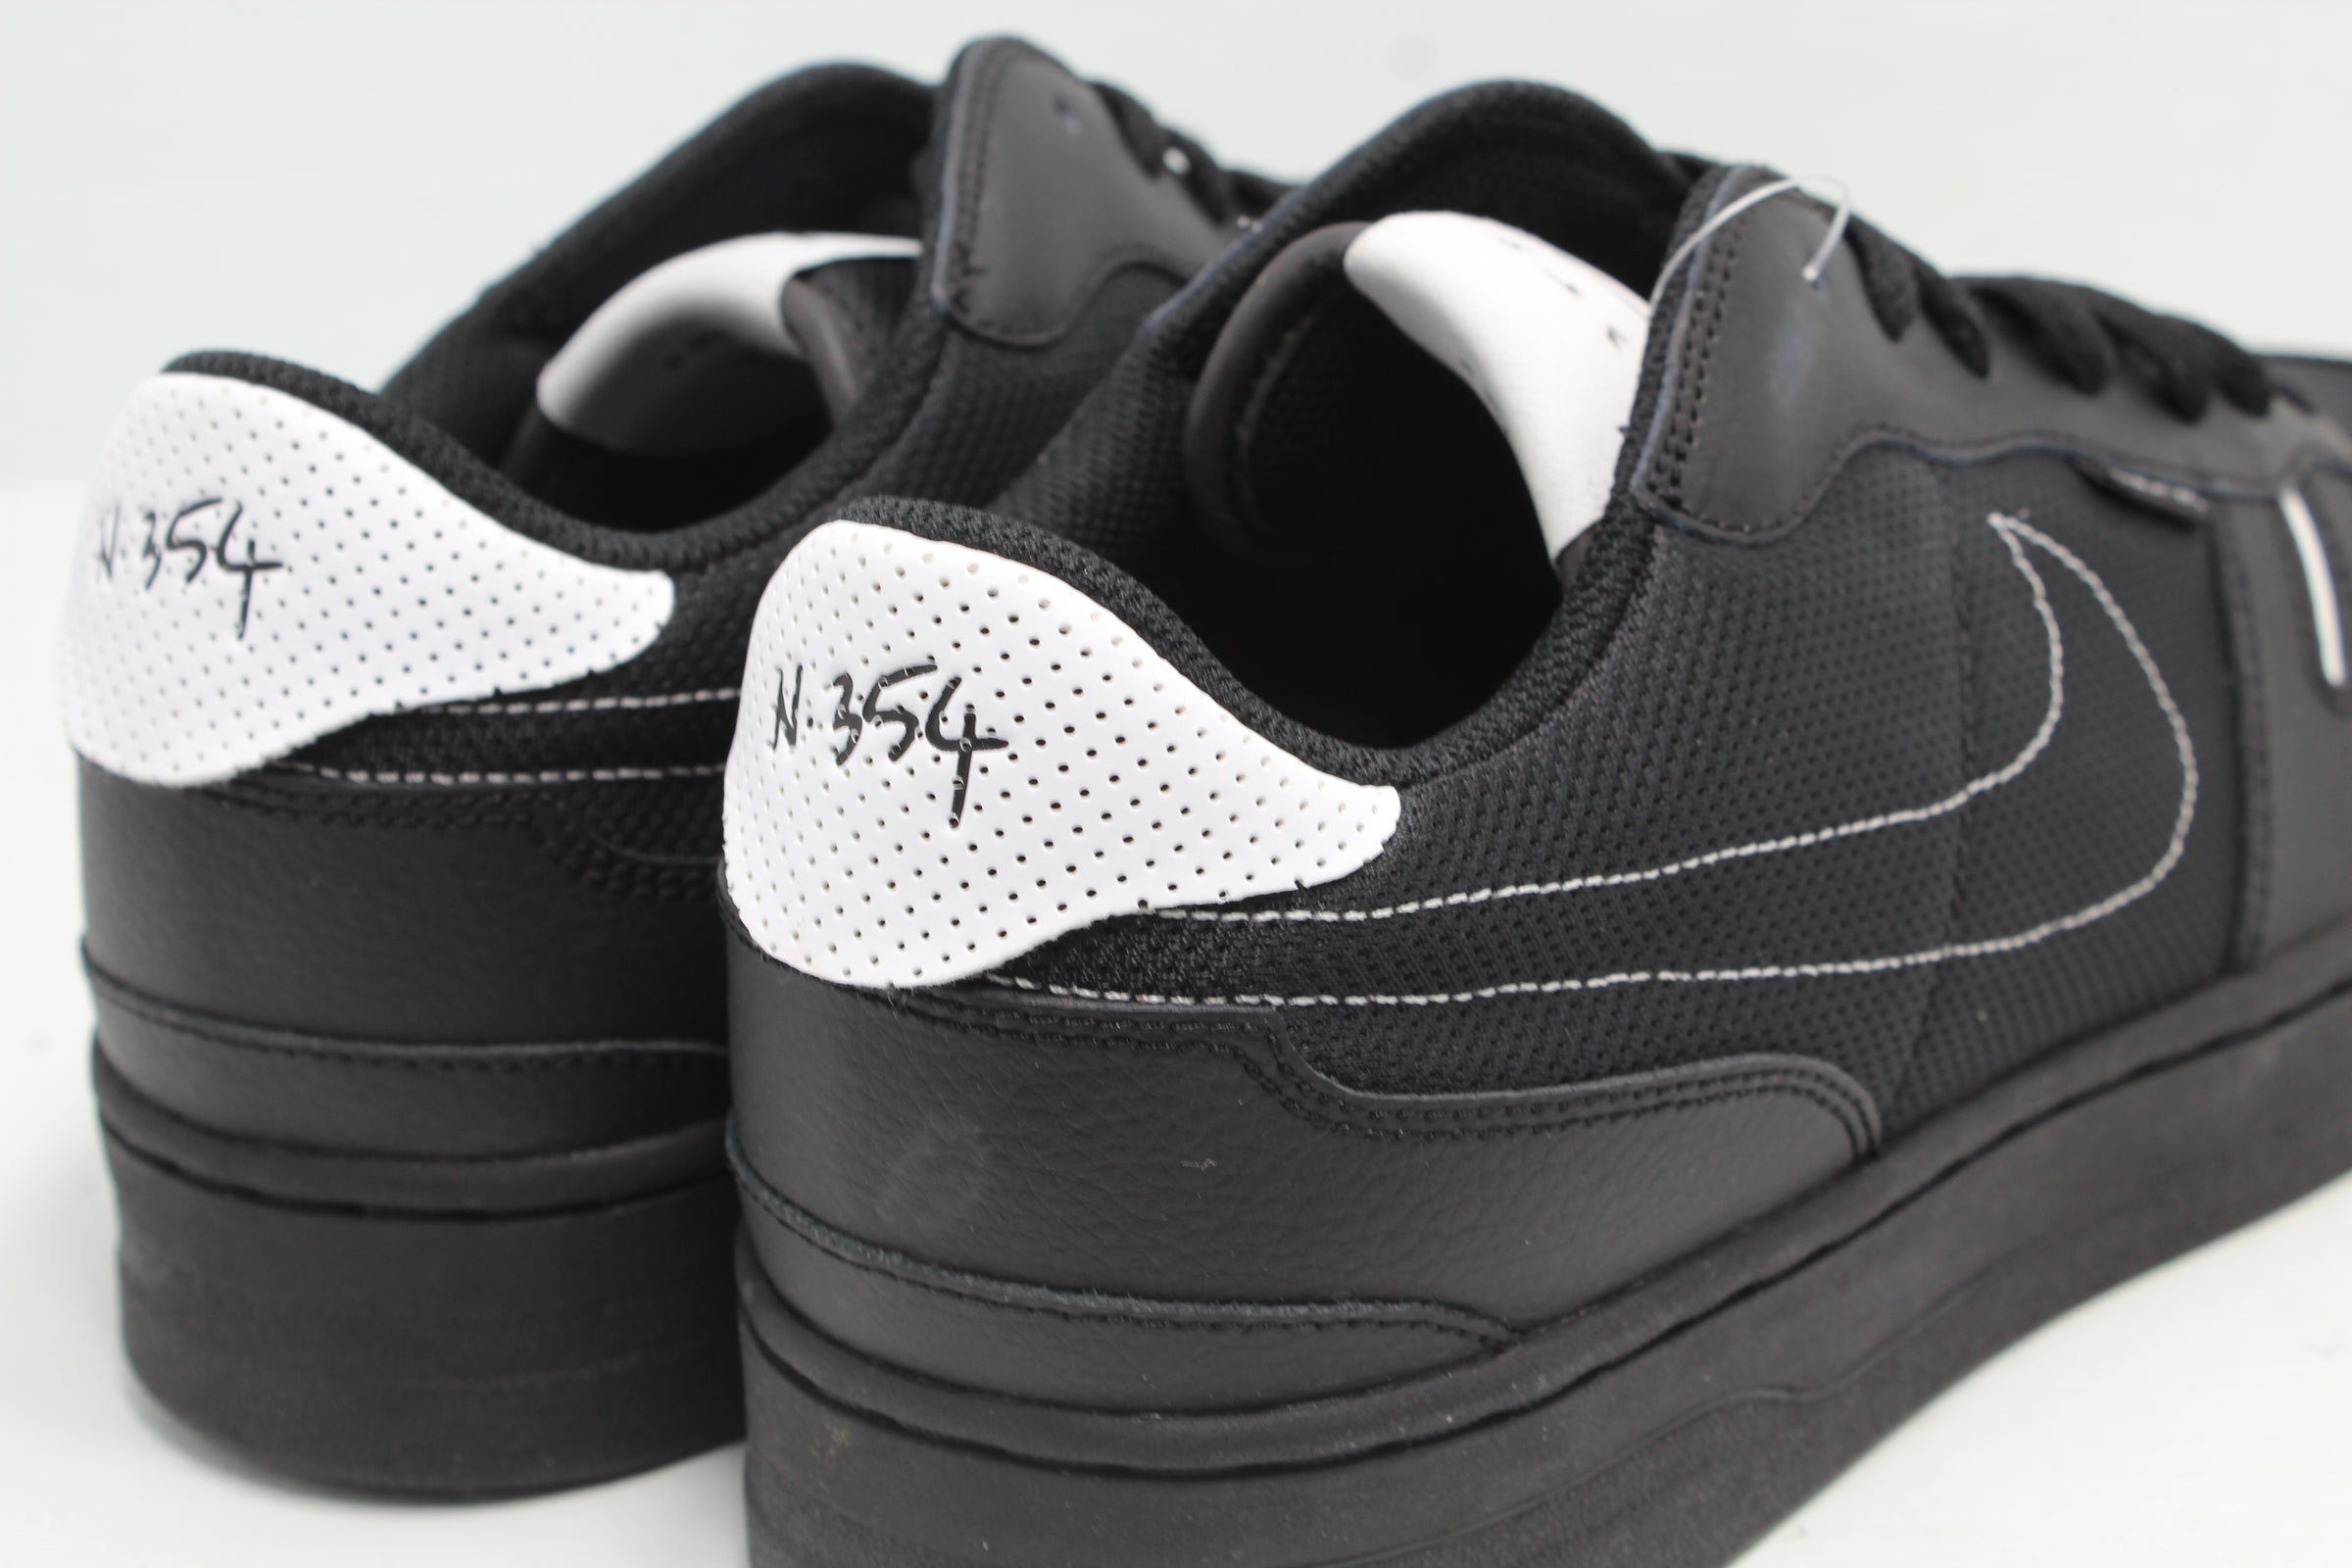 de ultramar Exquisito presentar Nike Squash Type Black White N.354 Sample | Hype Stew Sneakers Detroit